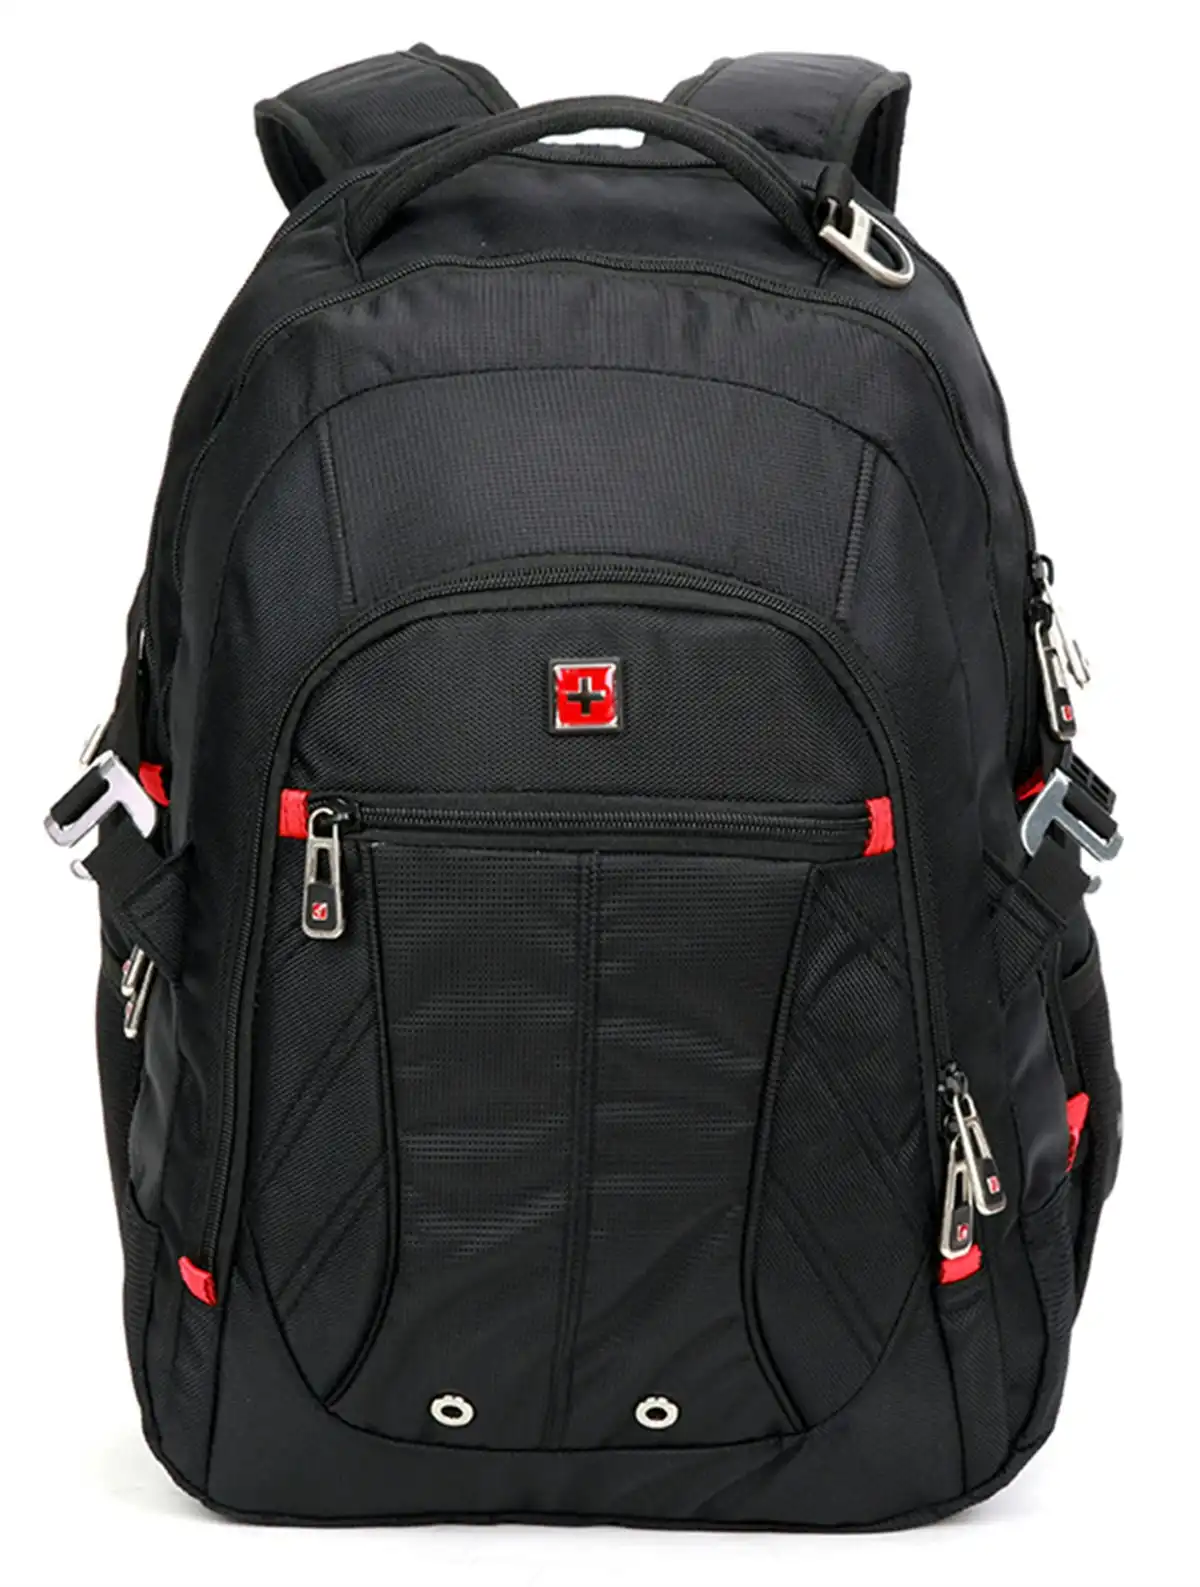 Swisswin Swiss Water-Resistant 15.6" Laptop Backpack School Backpack Travel Shoulder Bag SW8110